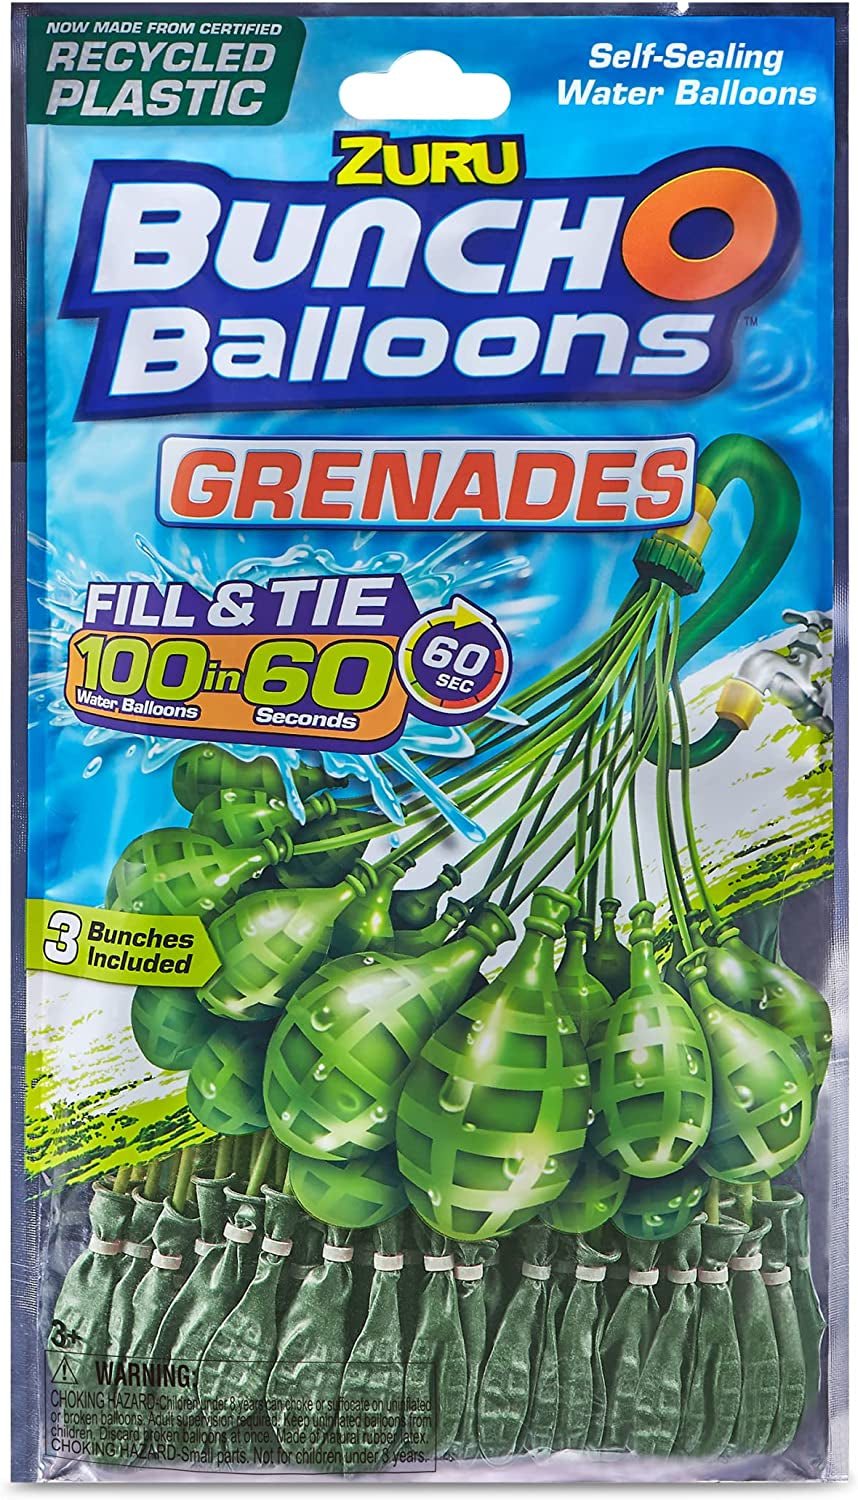 100 Grenade Rapid-Filling Self-Sealing Water Balloons by ZURU, (Model: 56112Q)